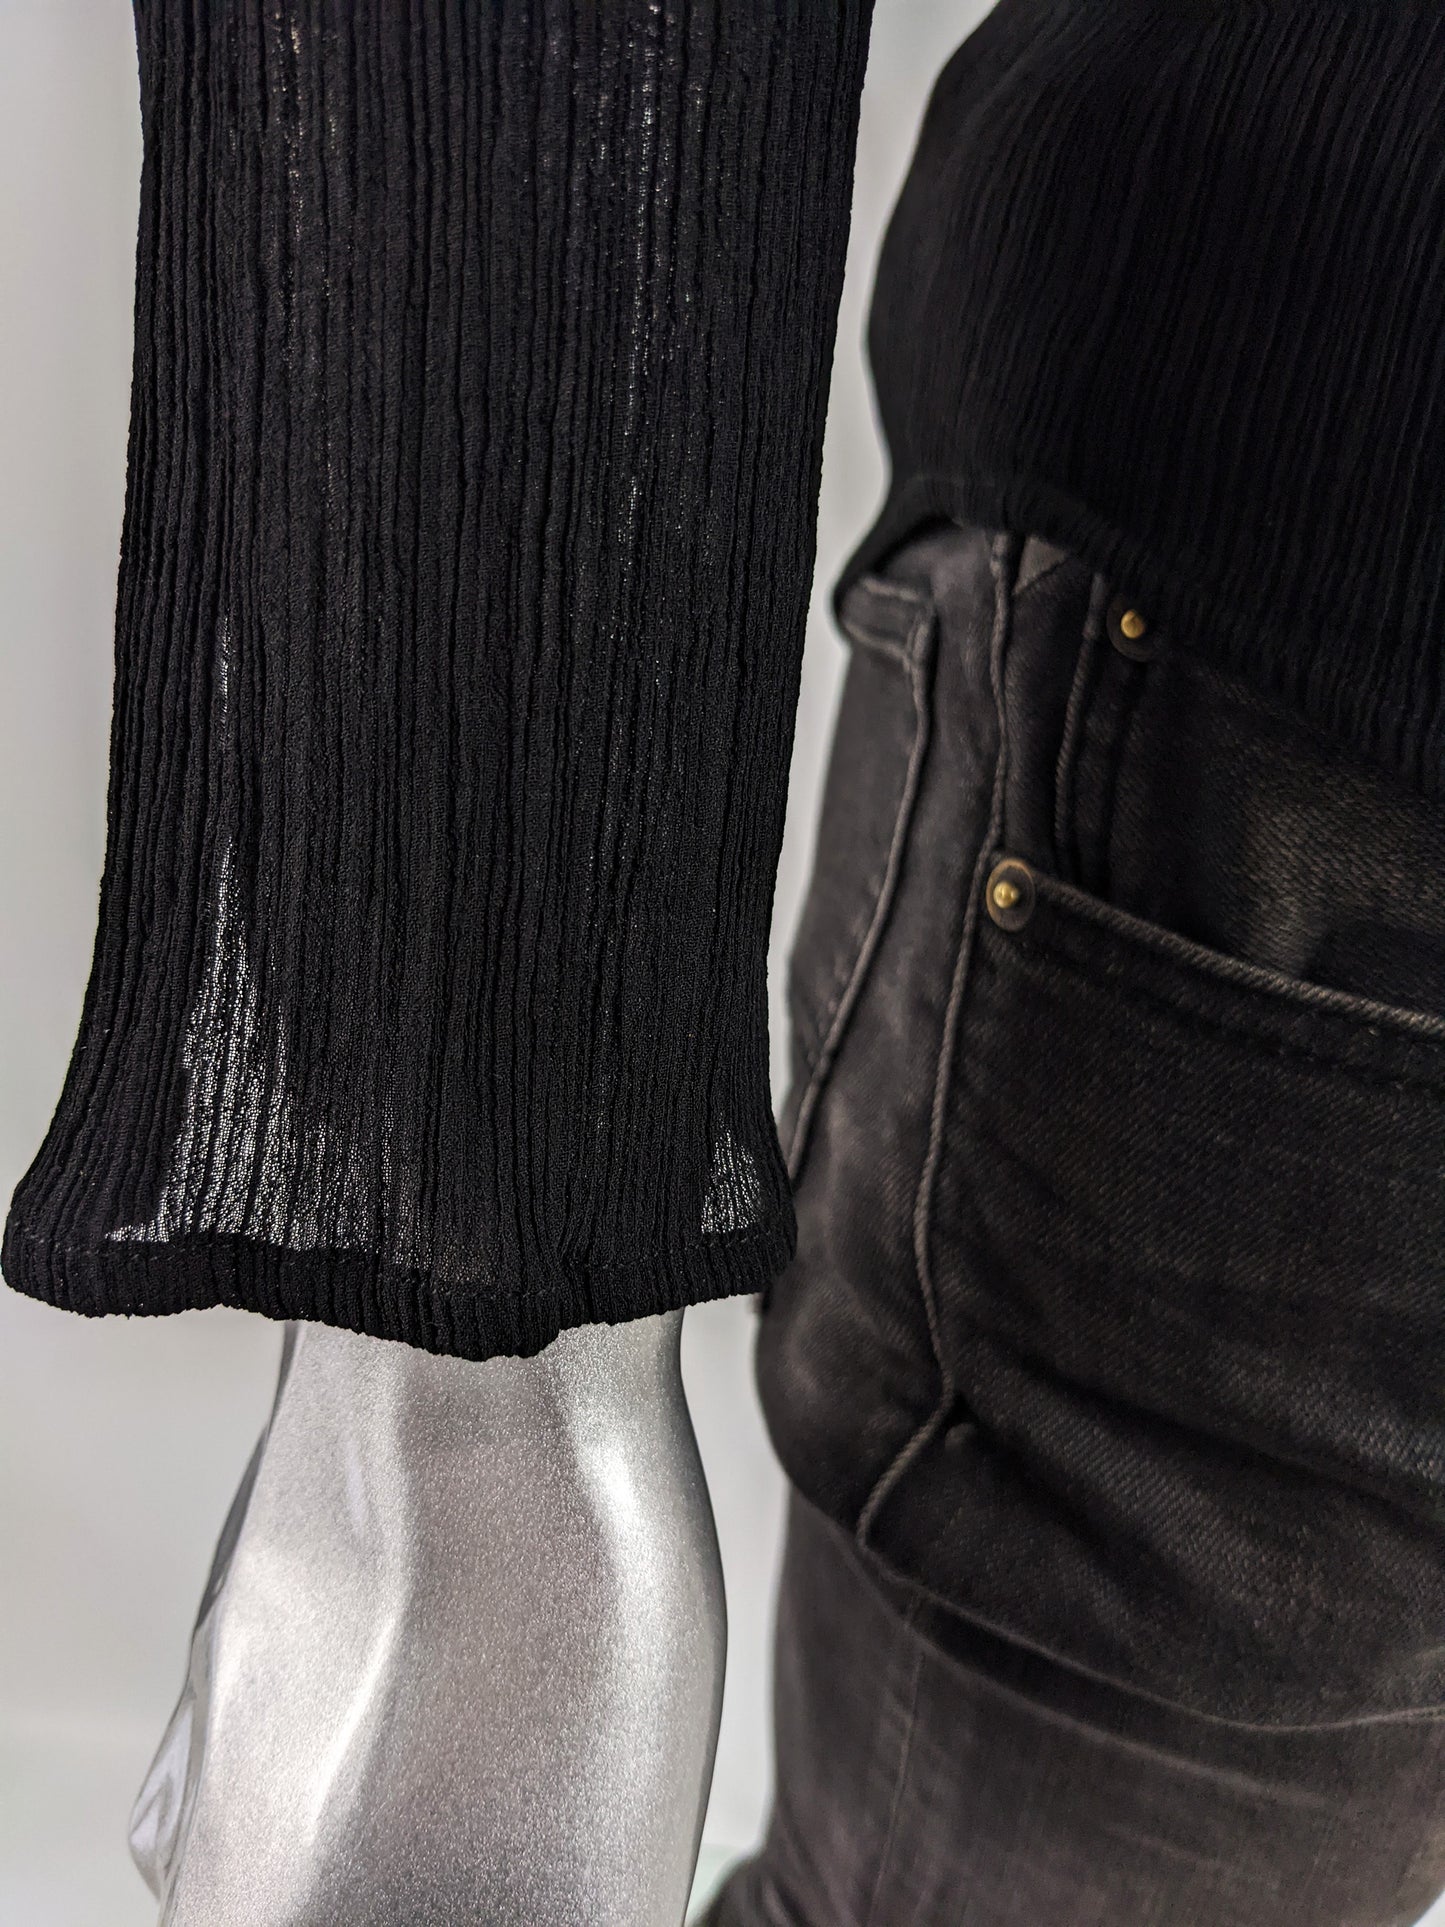 Mens Vintage Black Plissé Long Sleeve Shirt, 1990s